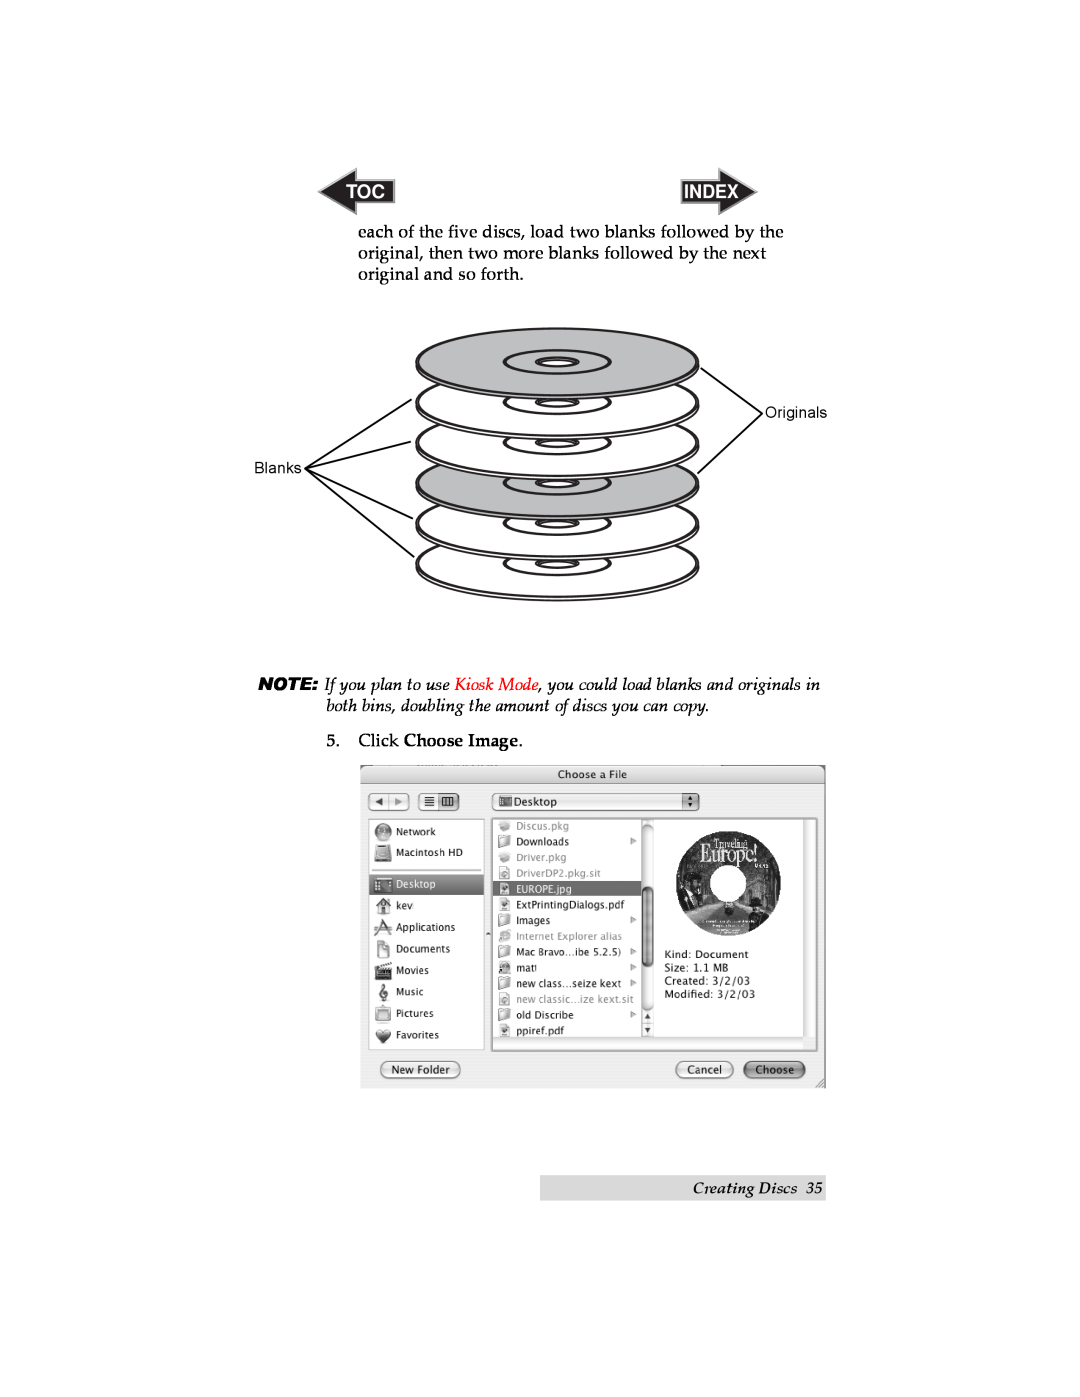 Primera Technology II user manual Index, Click Choose Image, Originals Blanks, Creating Discs 